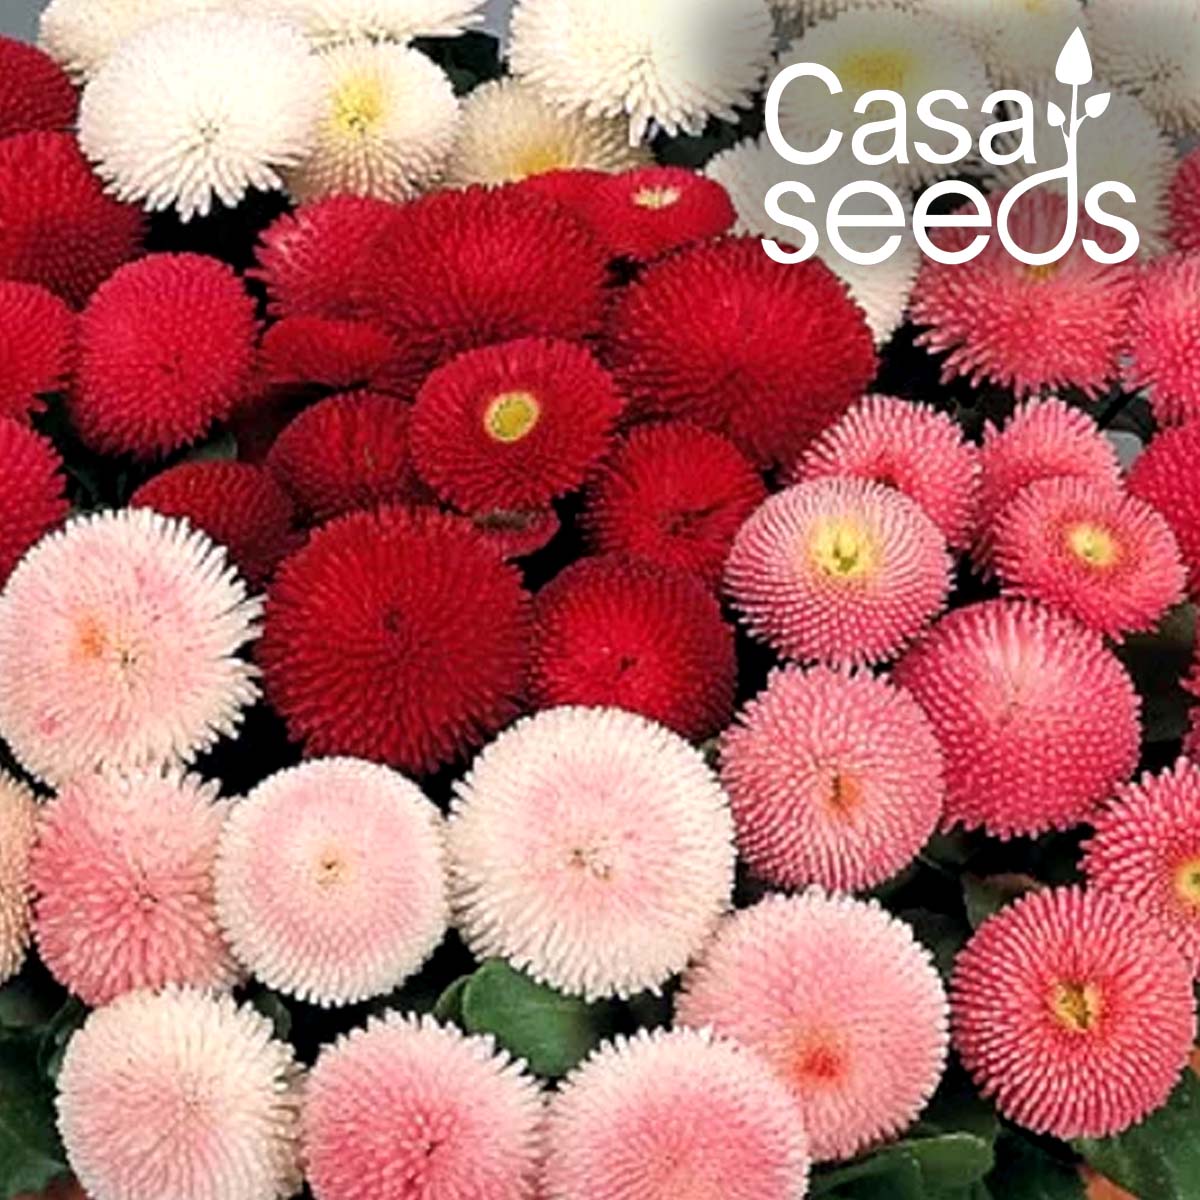 Daisy-Bellis pomponette Mix- 200 Seeds